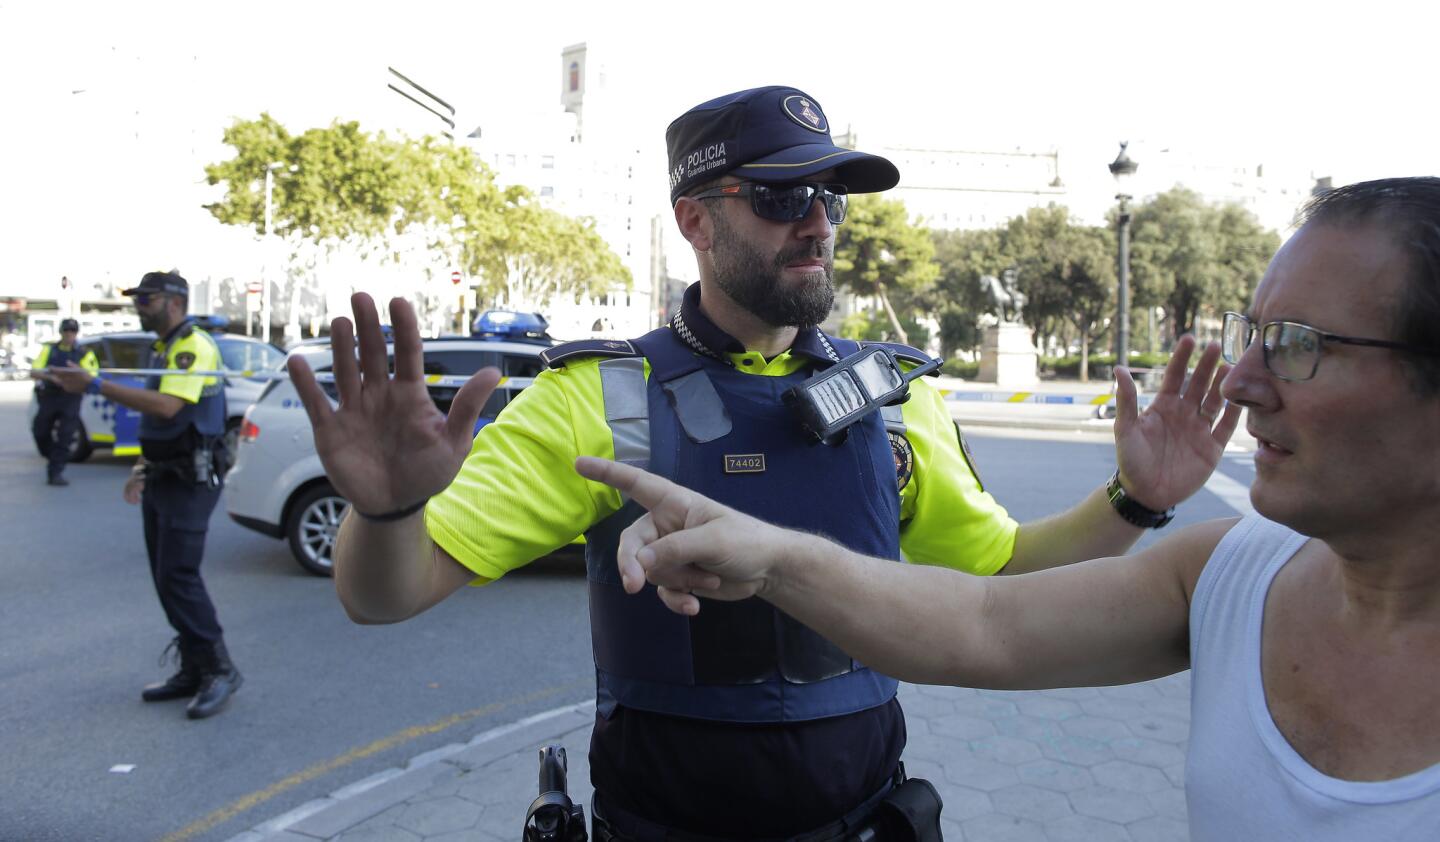 13 dead after van plows into Barcelona crowd